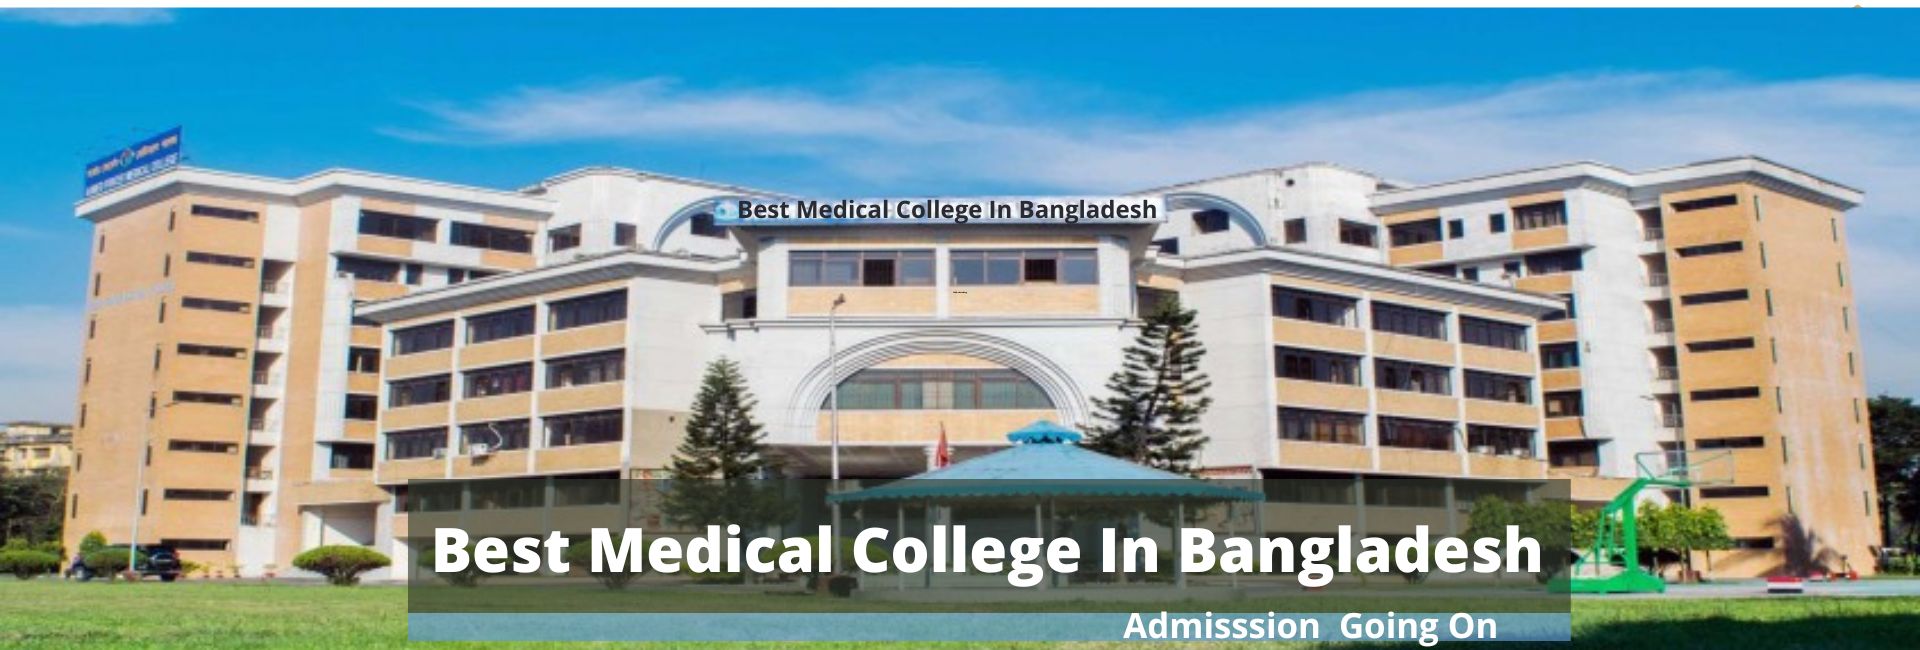 Best Medical College In Bangladesh